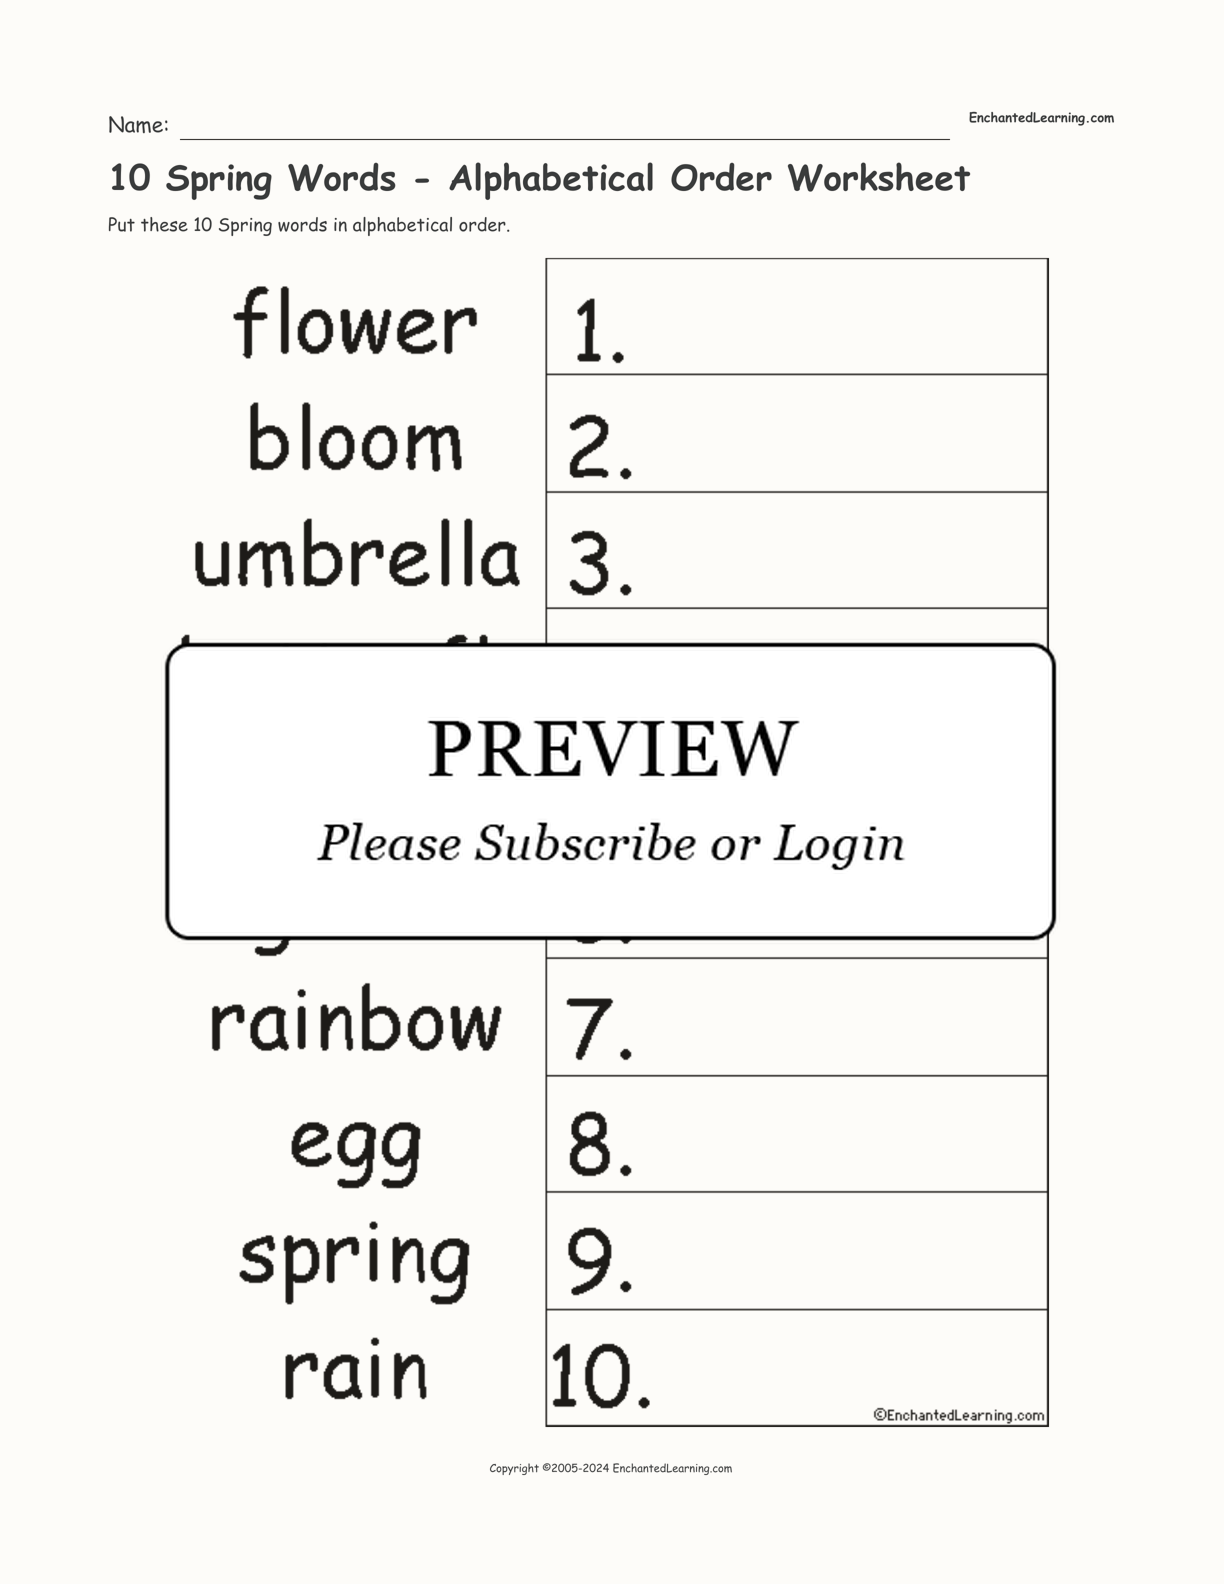 10 Spring Words - Alphabetical Order Worksheet interactive worksheet page 1